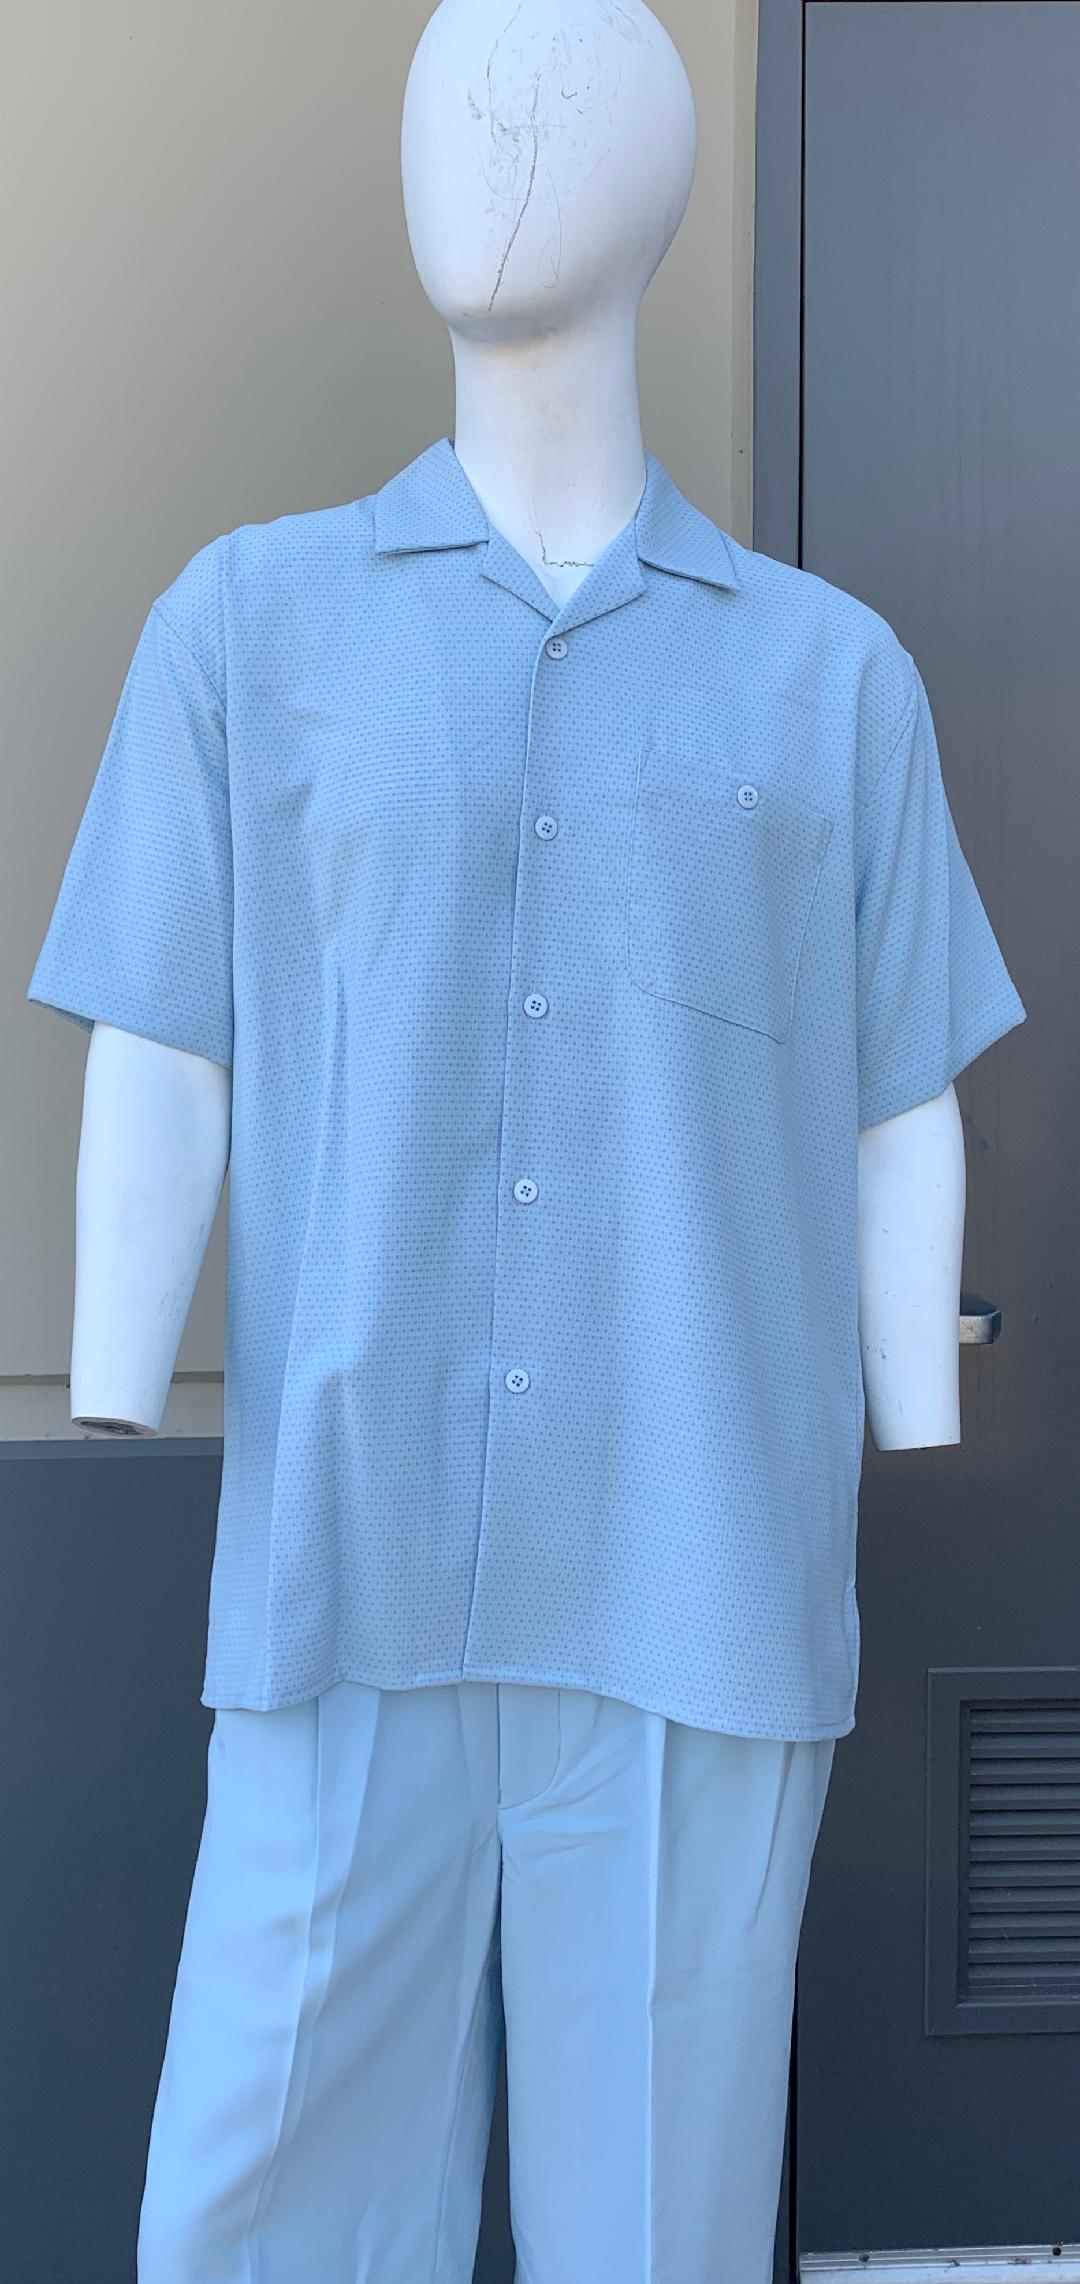 Polka Dots Short Sleeve 2pc Walking Suit Set - Sky Blue